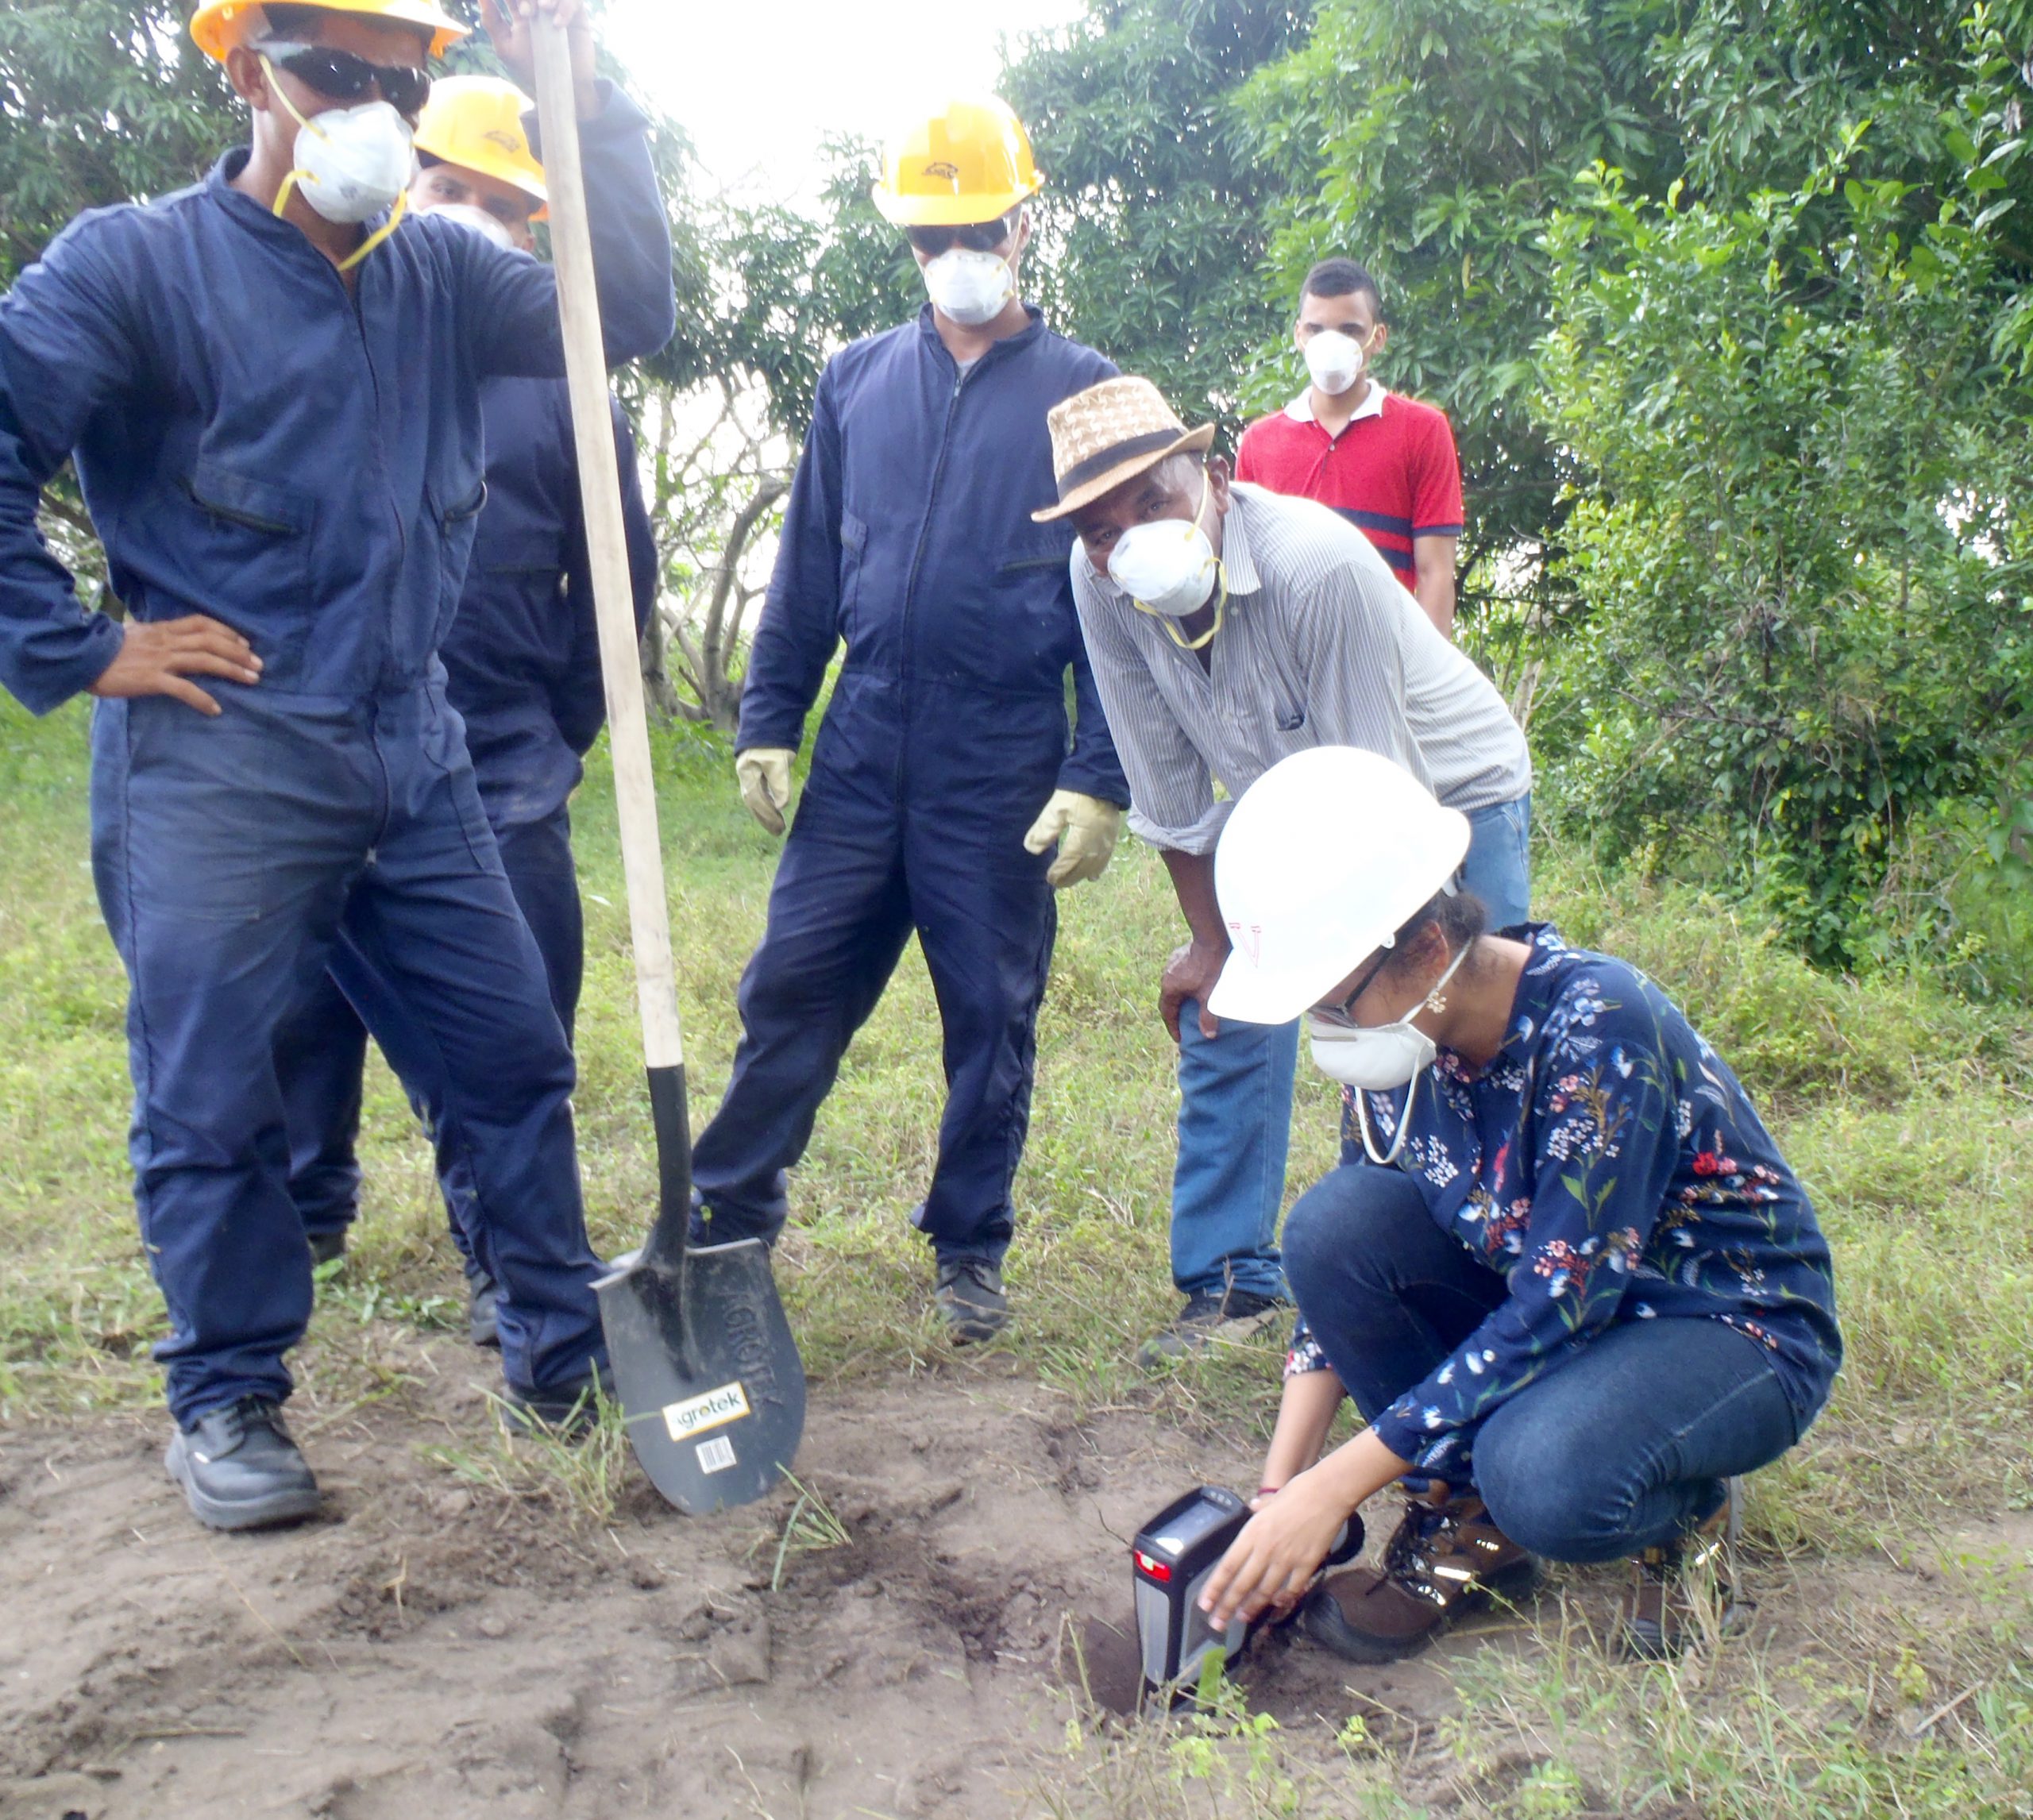 Pure Earth team measuring soil lead levels in Malambo.